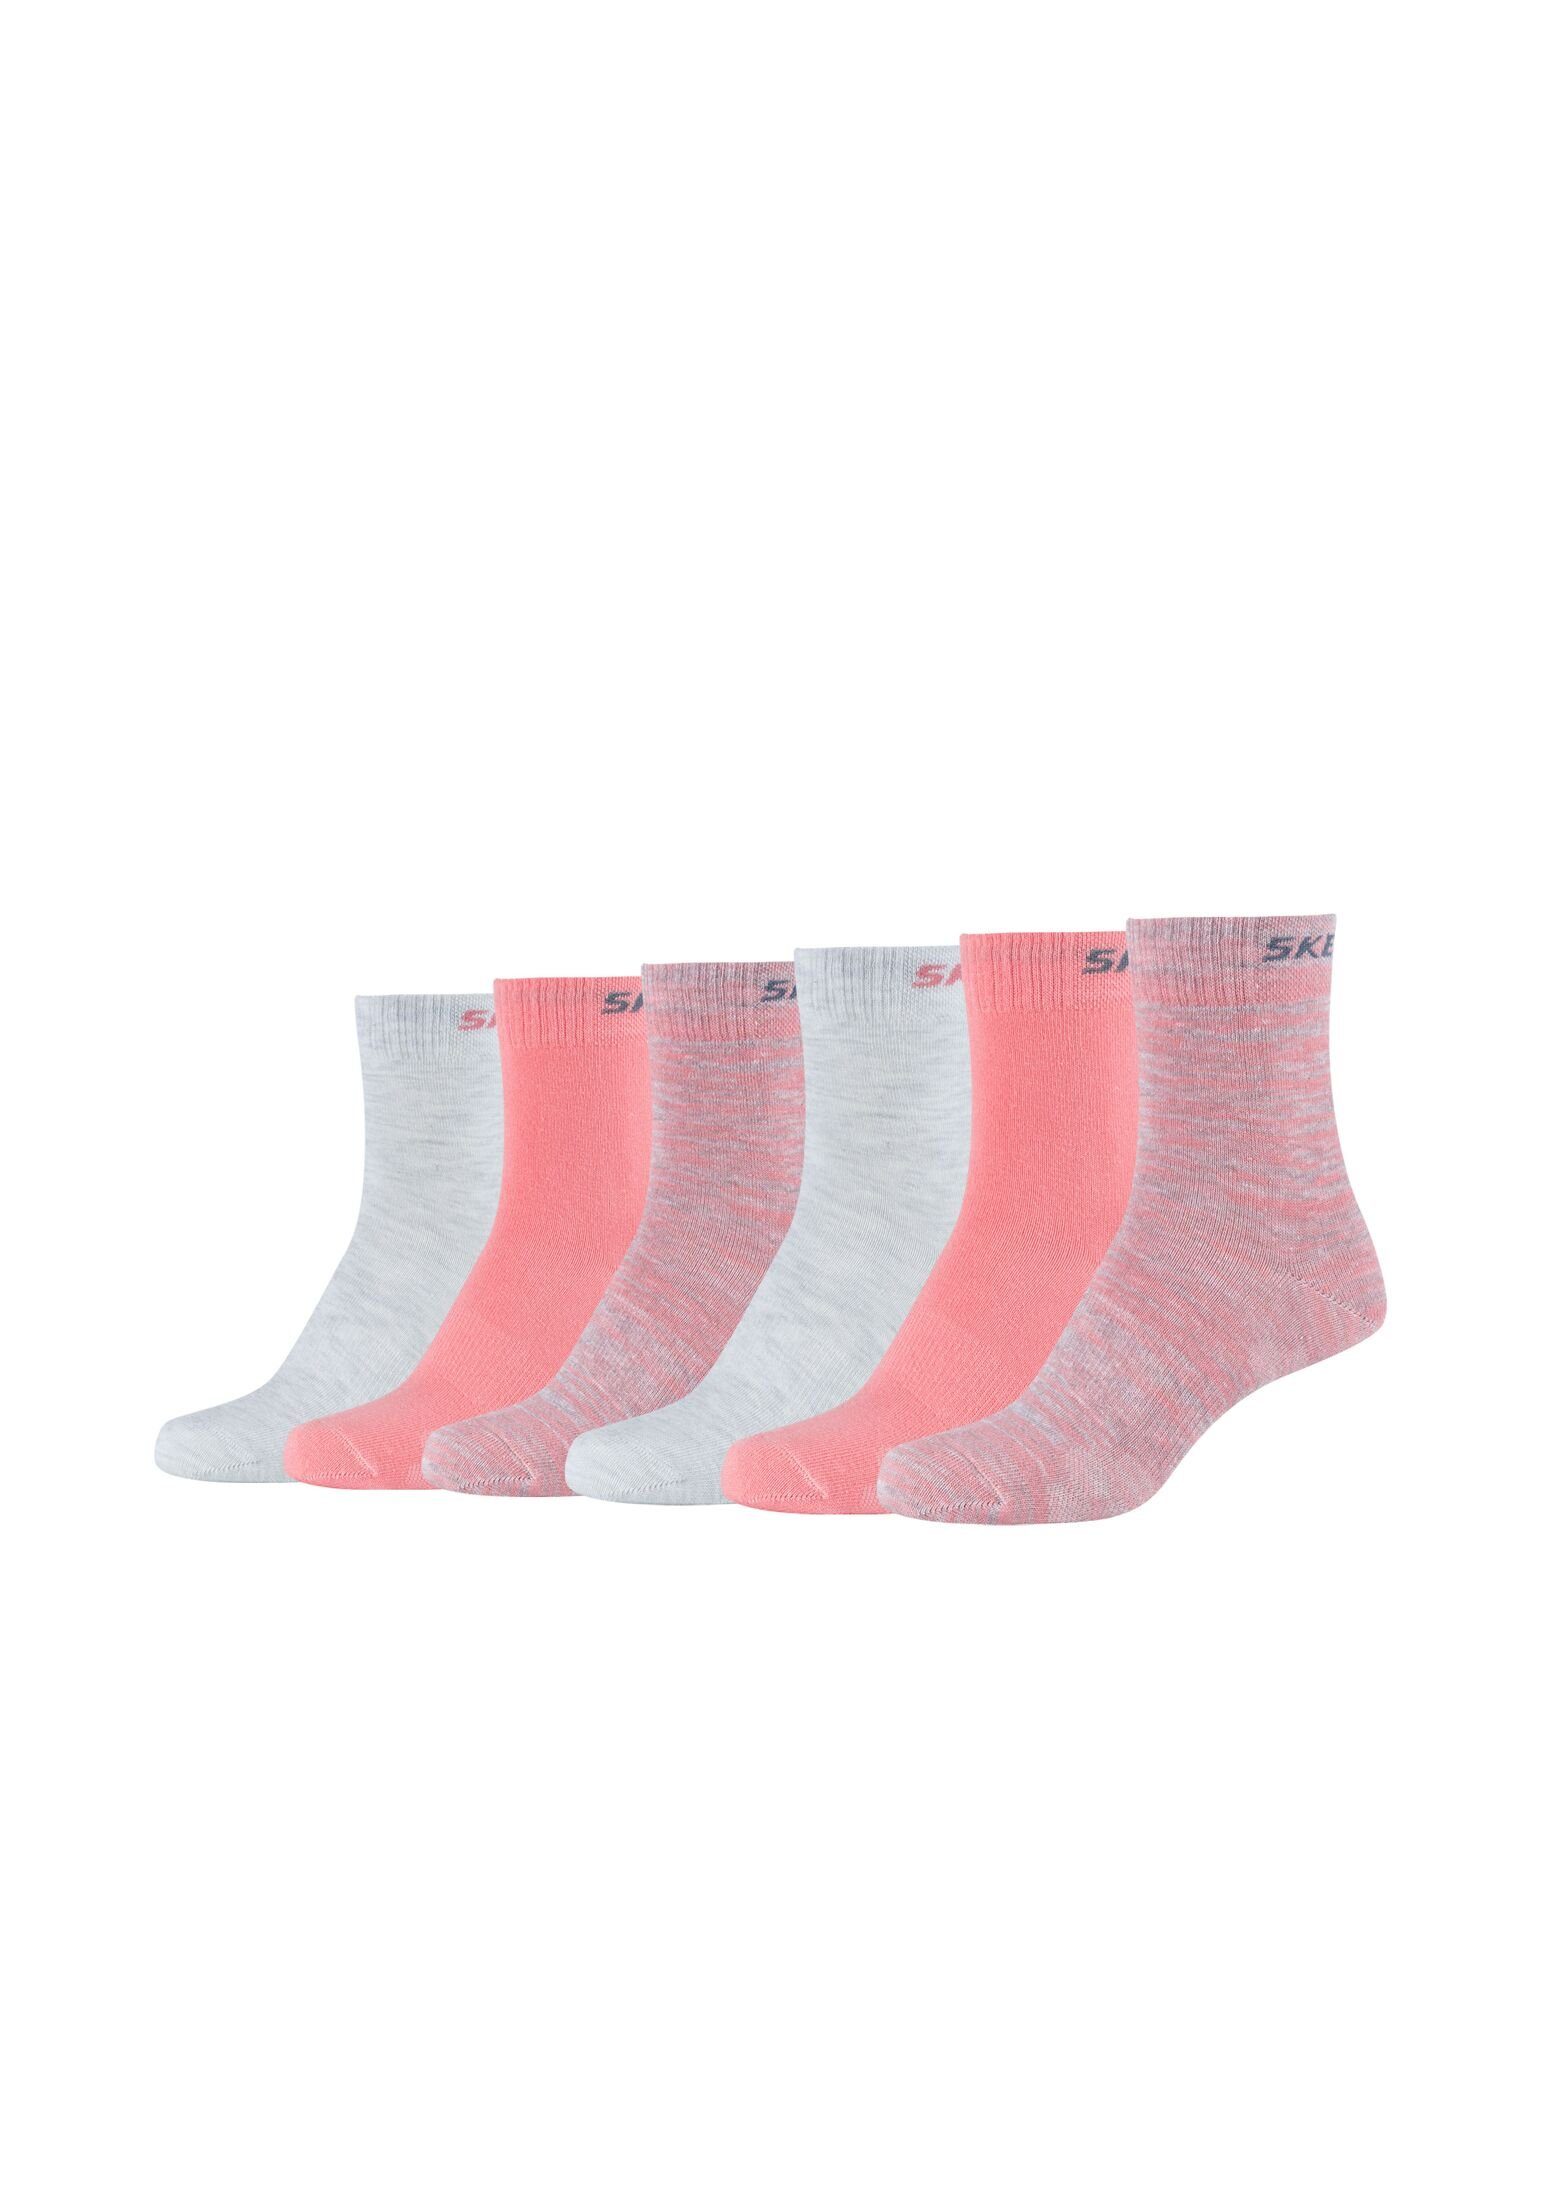 Skechers Socken Socken 6er Pack flamingo mouliné